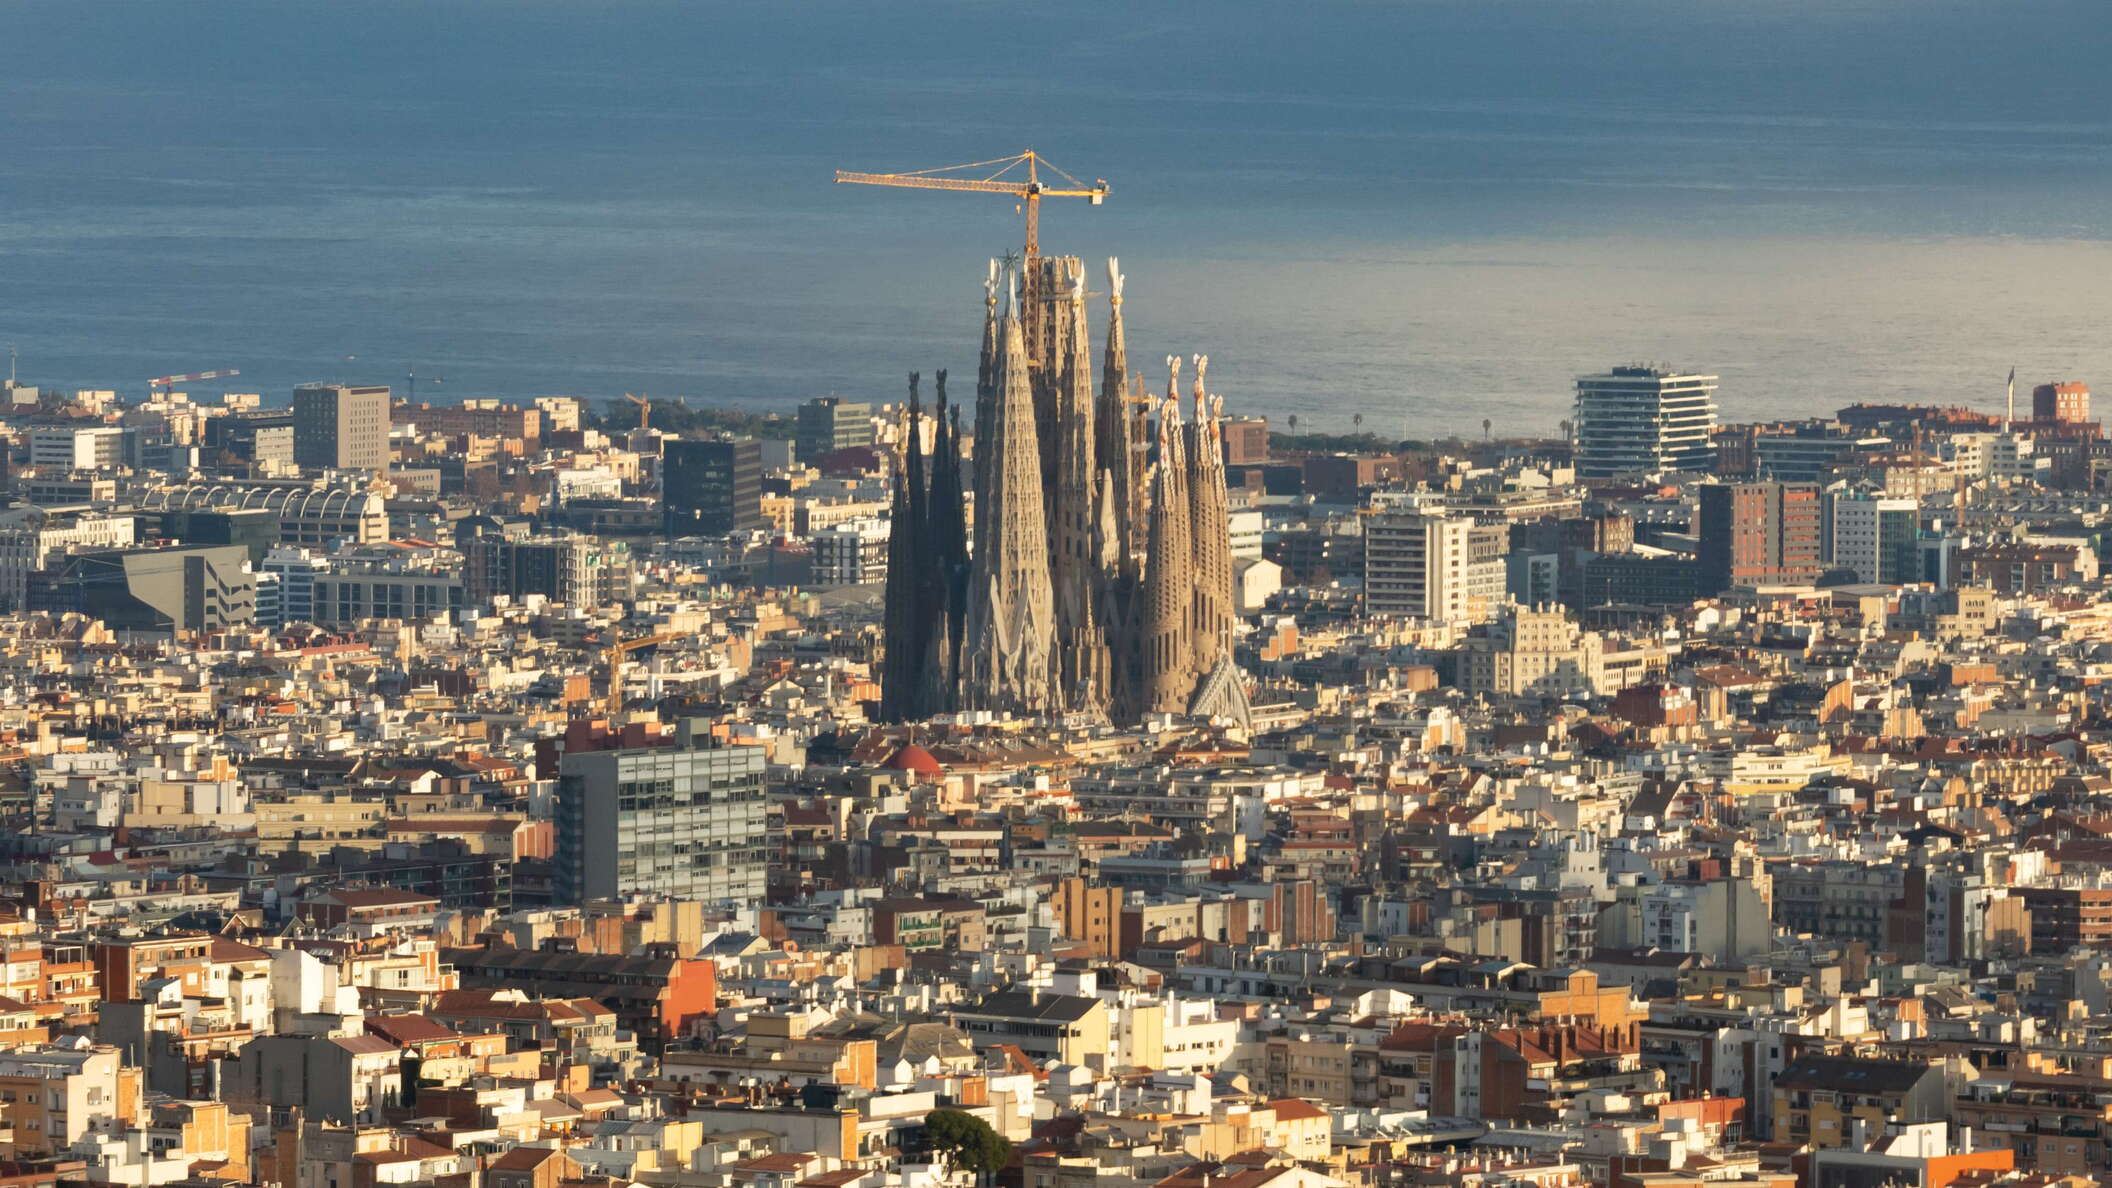 Barcelona | Sagrada Família